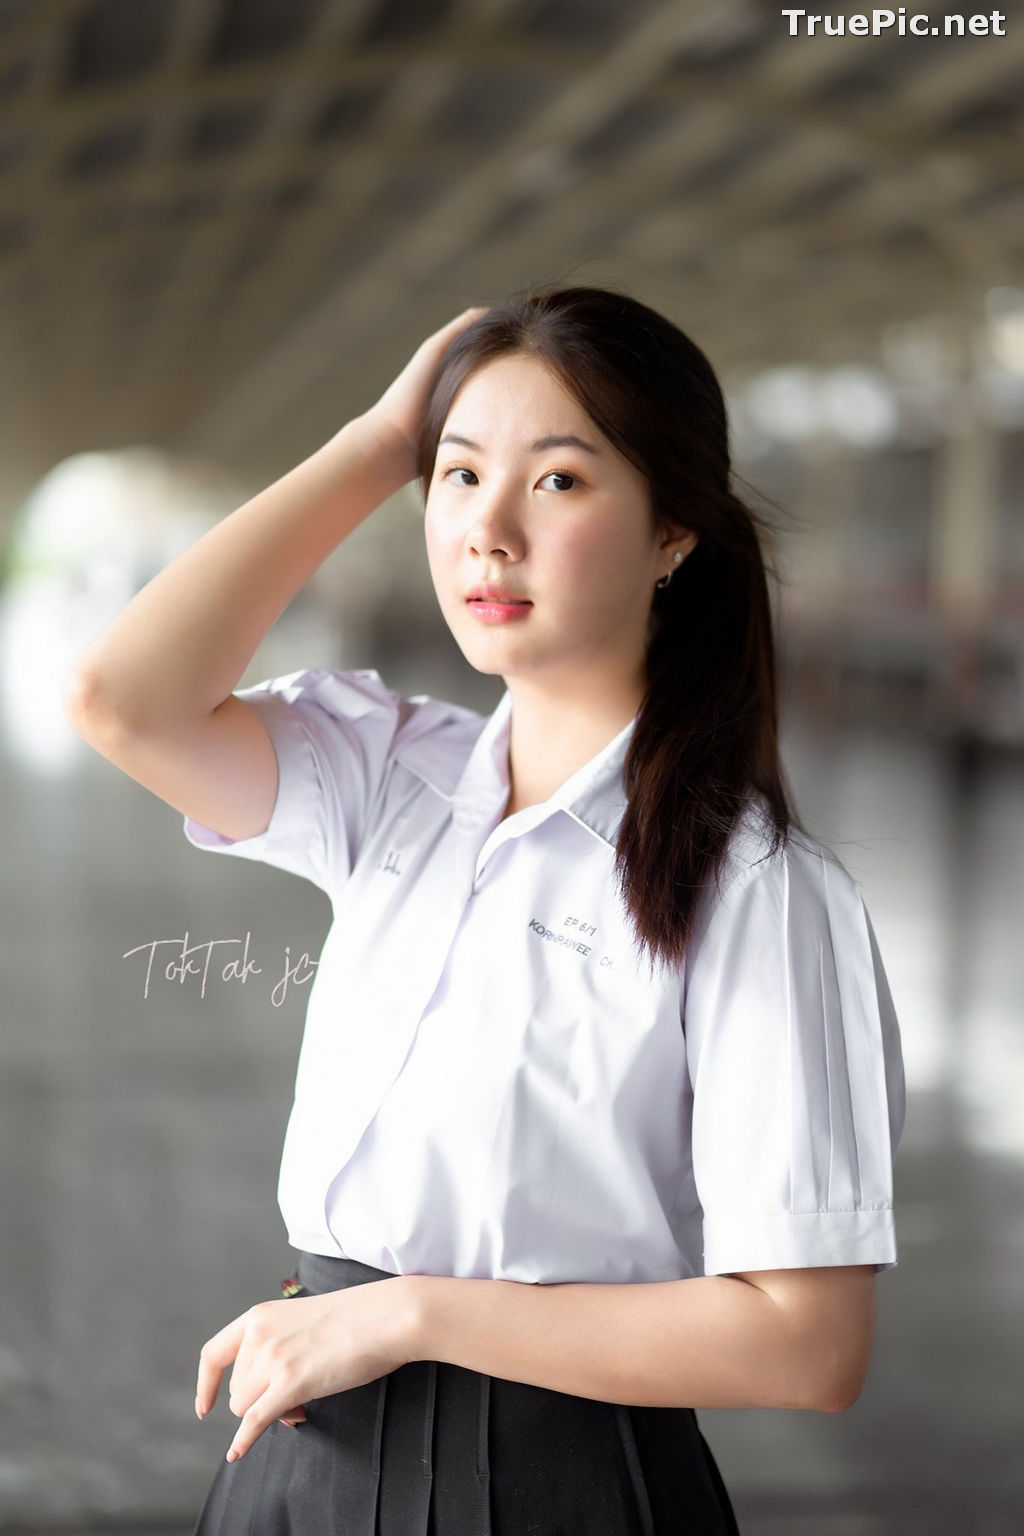 Image Thailand Model - Kornrawee Chokejindachai - Cute Student Girl - TruePic.net - Picture-14